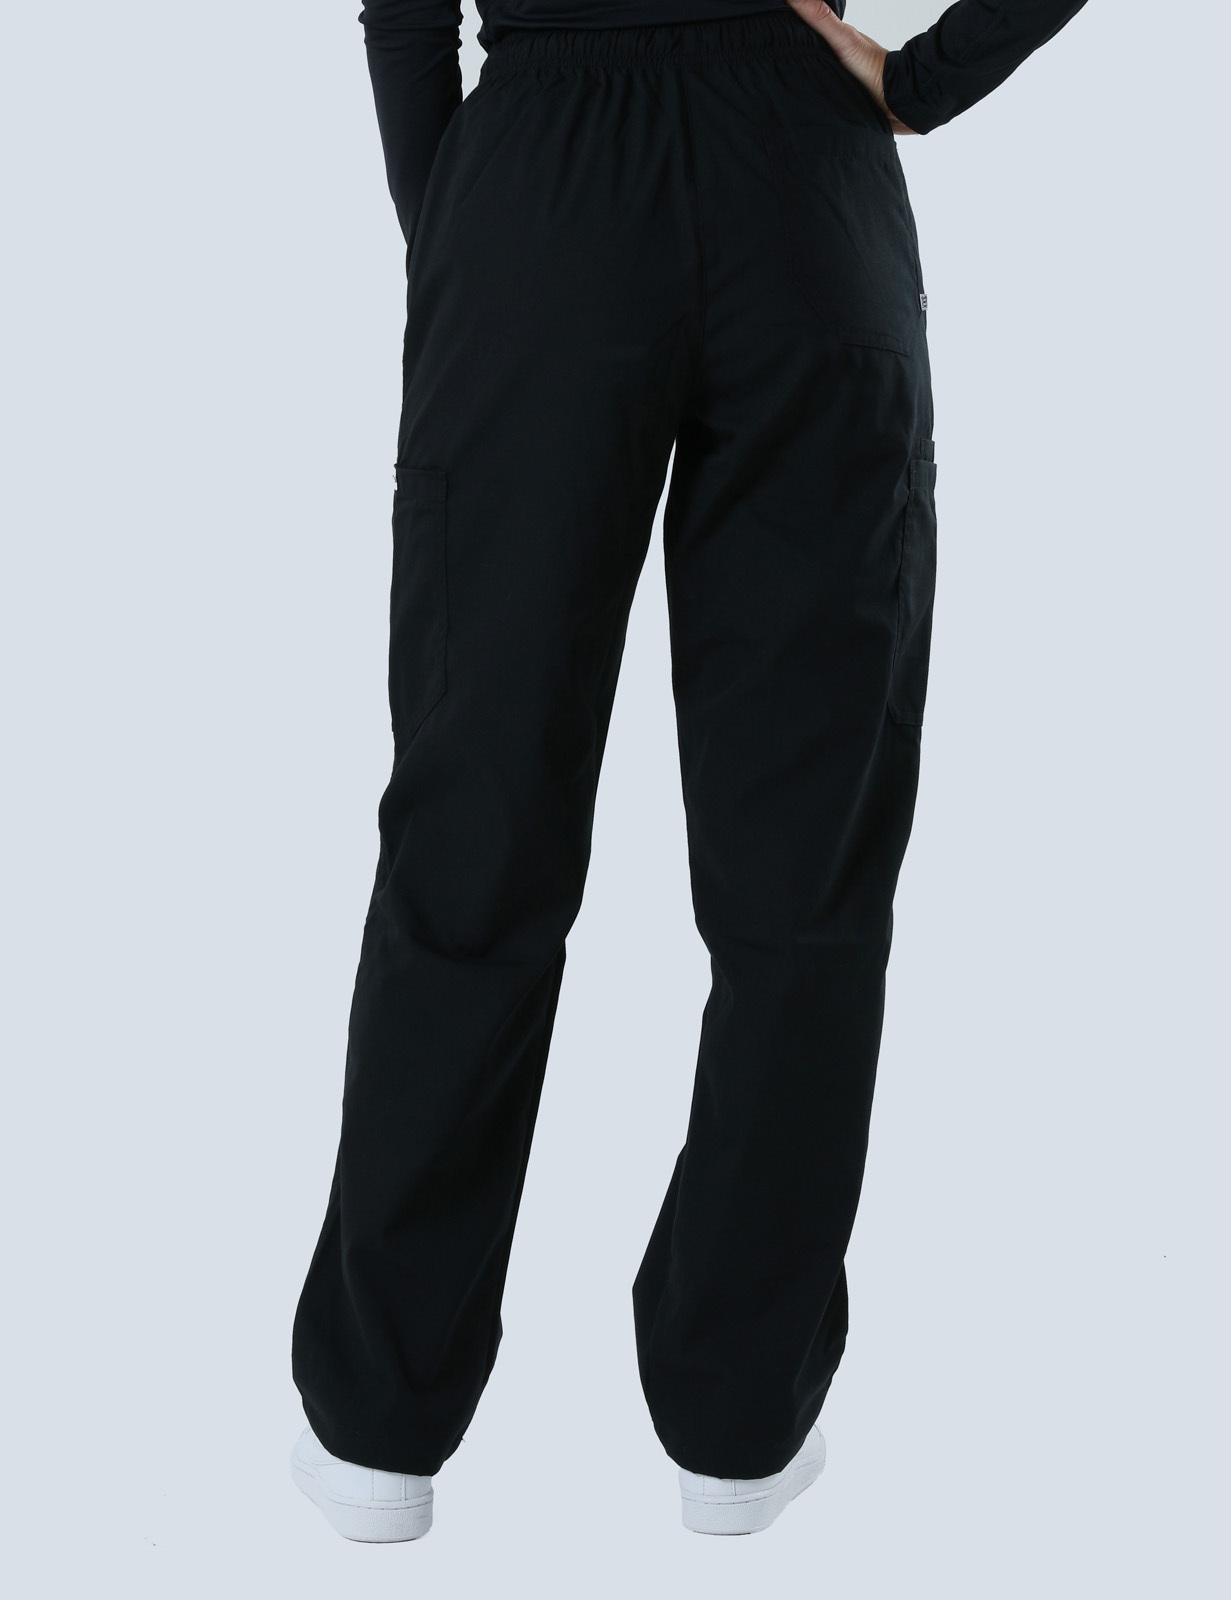 Women's Cargo Performance Pants - Black - 3X Large - 1